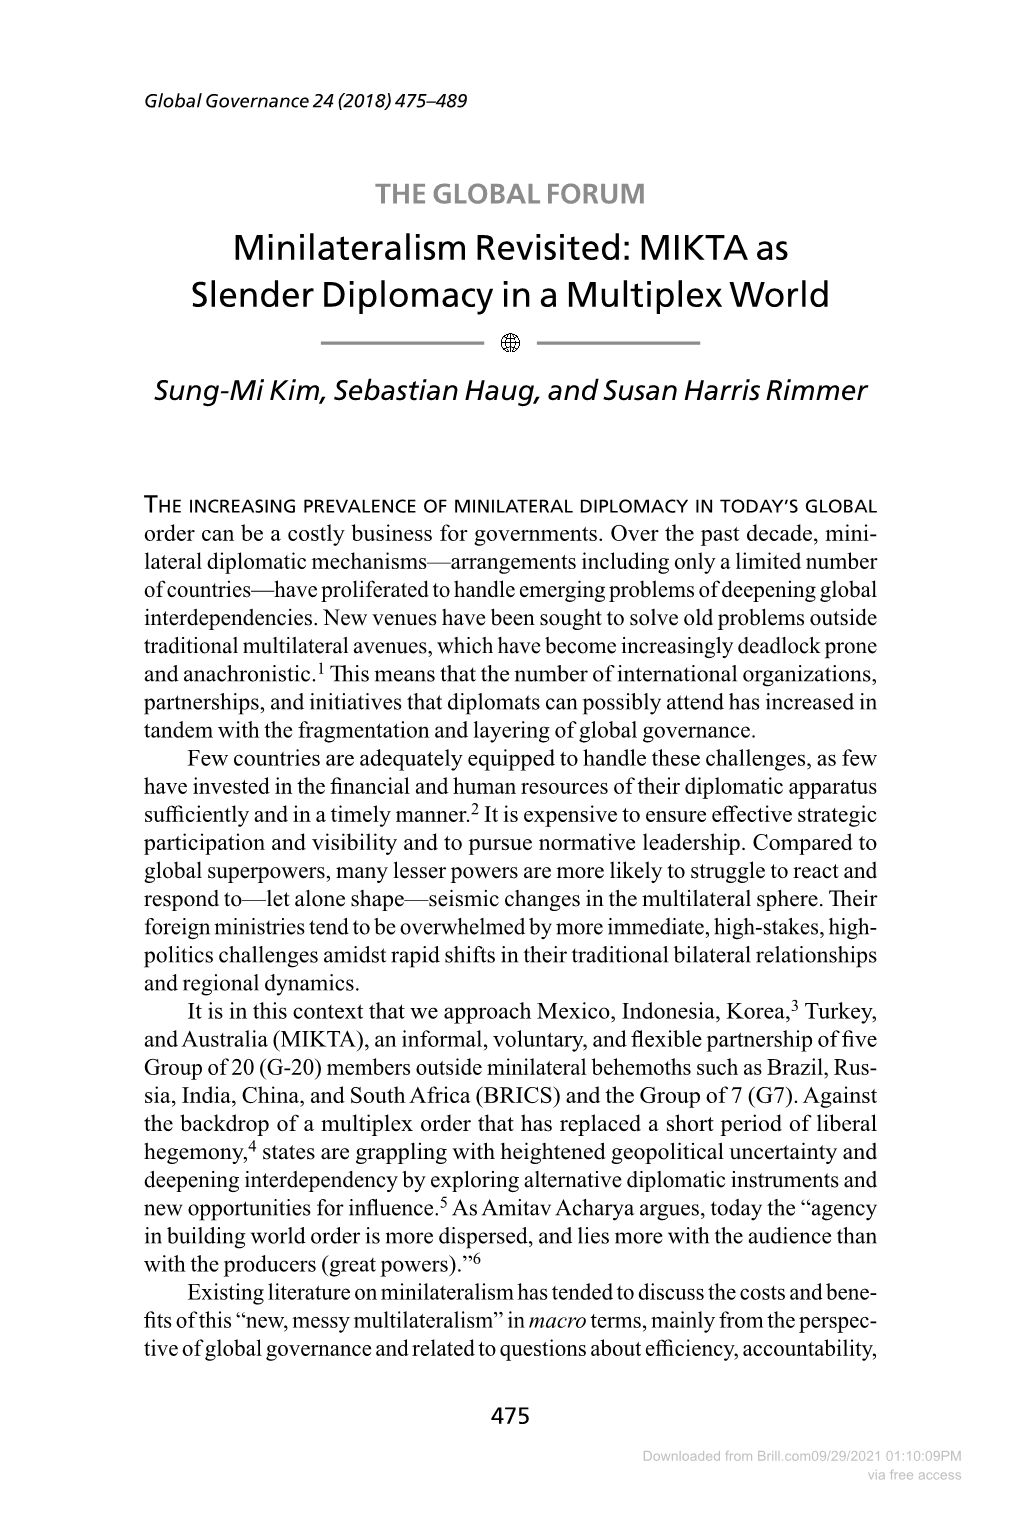 Minilateralism Revisited: MIKTA As Slender Diplomacy in a Multiplex World